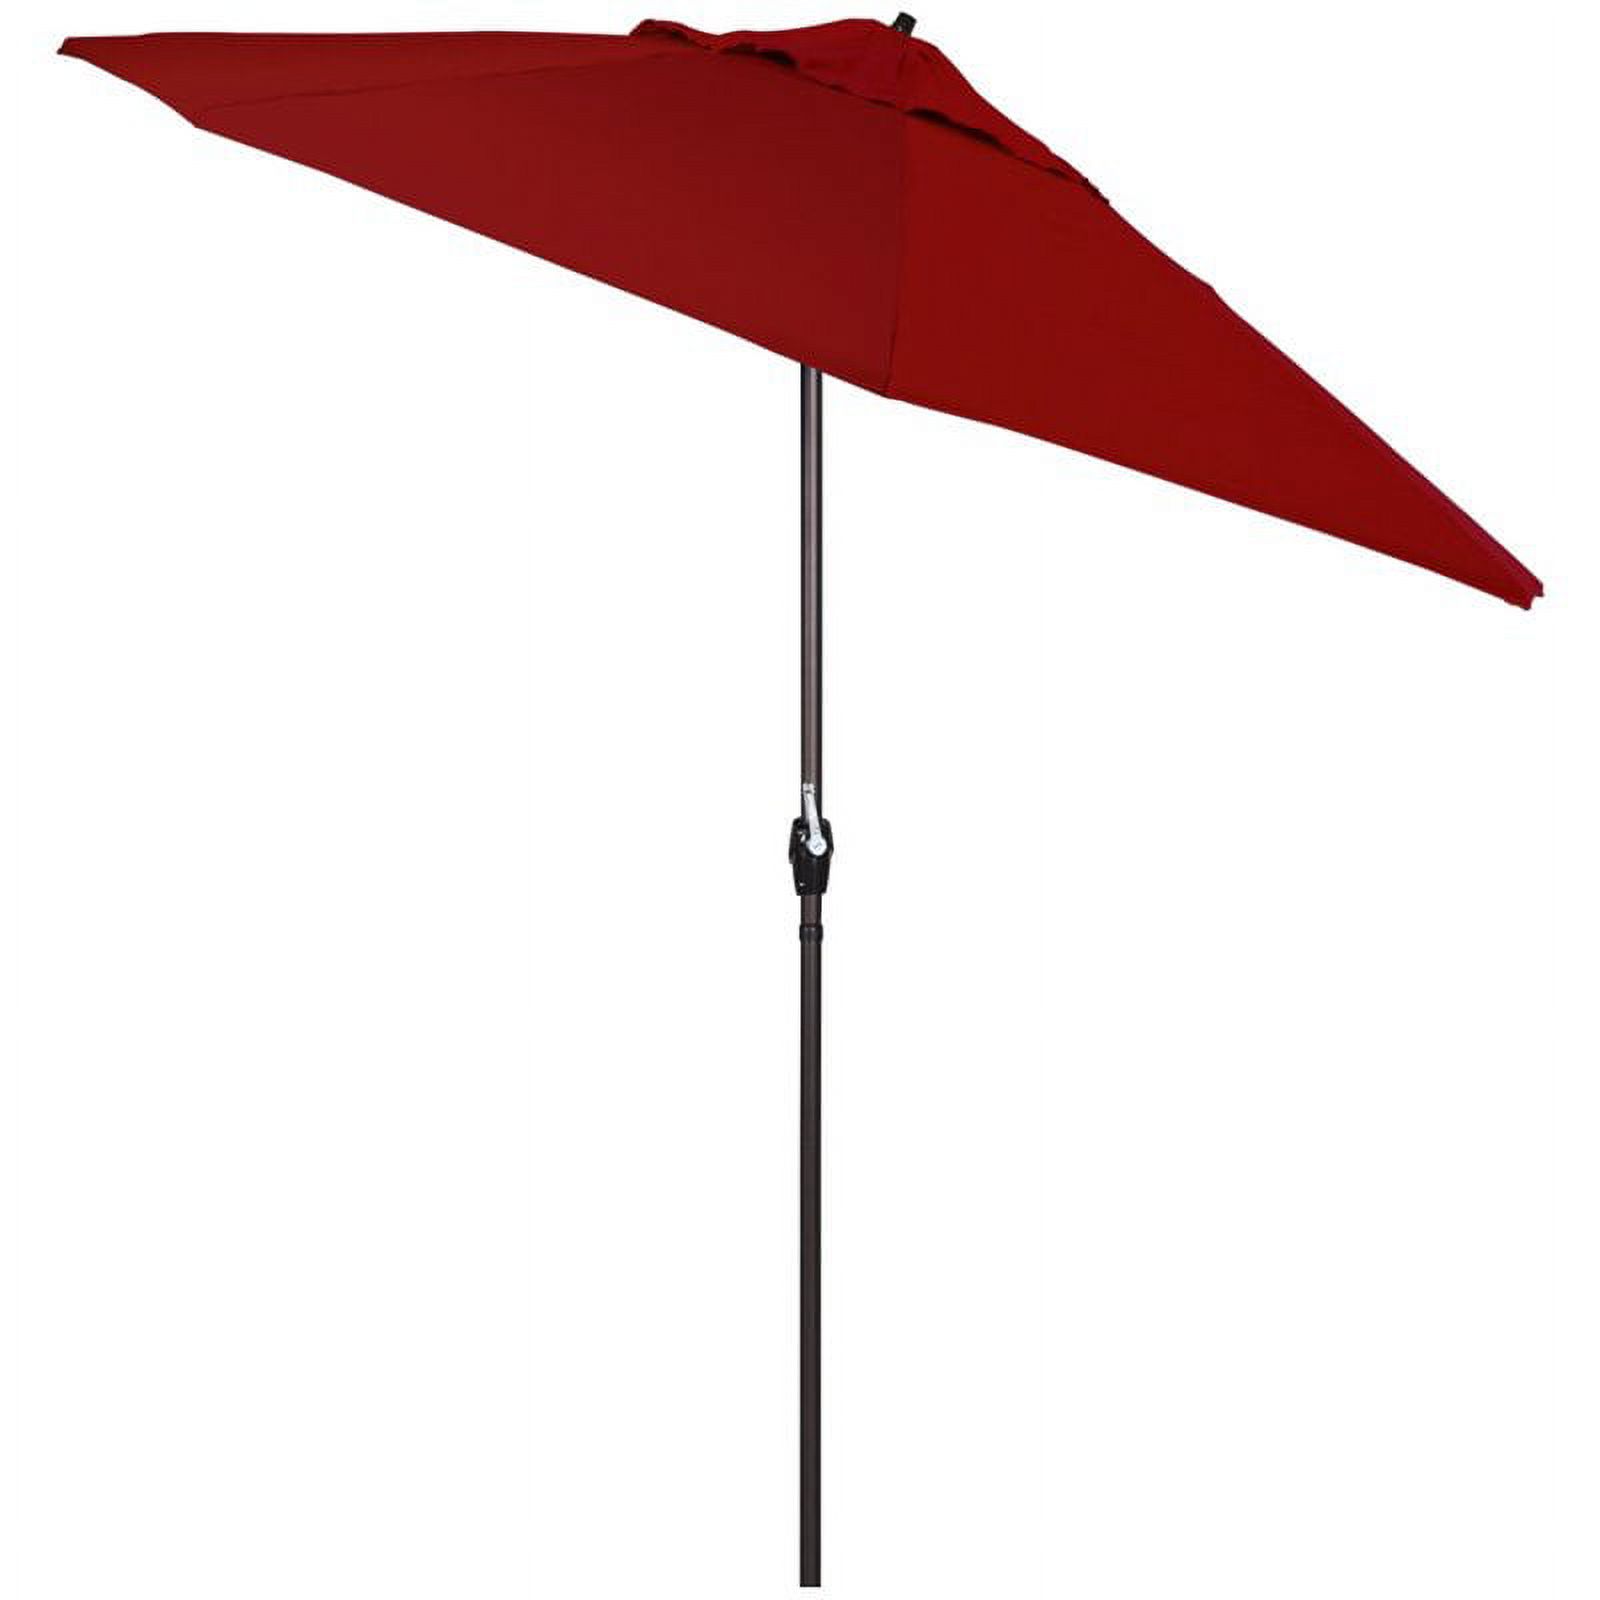 California Umbrella 9' Casa Sunbrella Tilt Crank Lift Patio Umbrella in Red - image 2 of 2